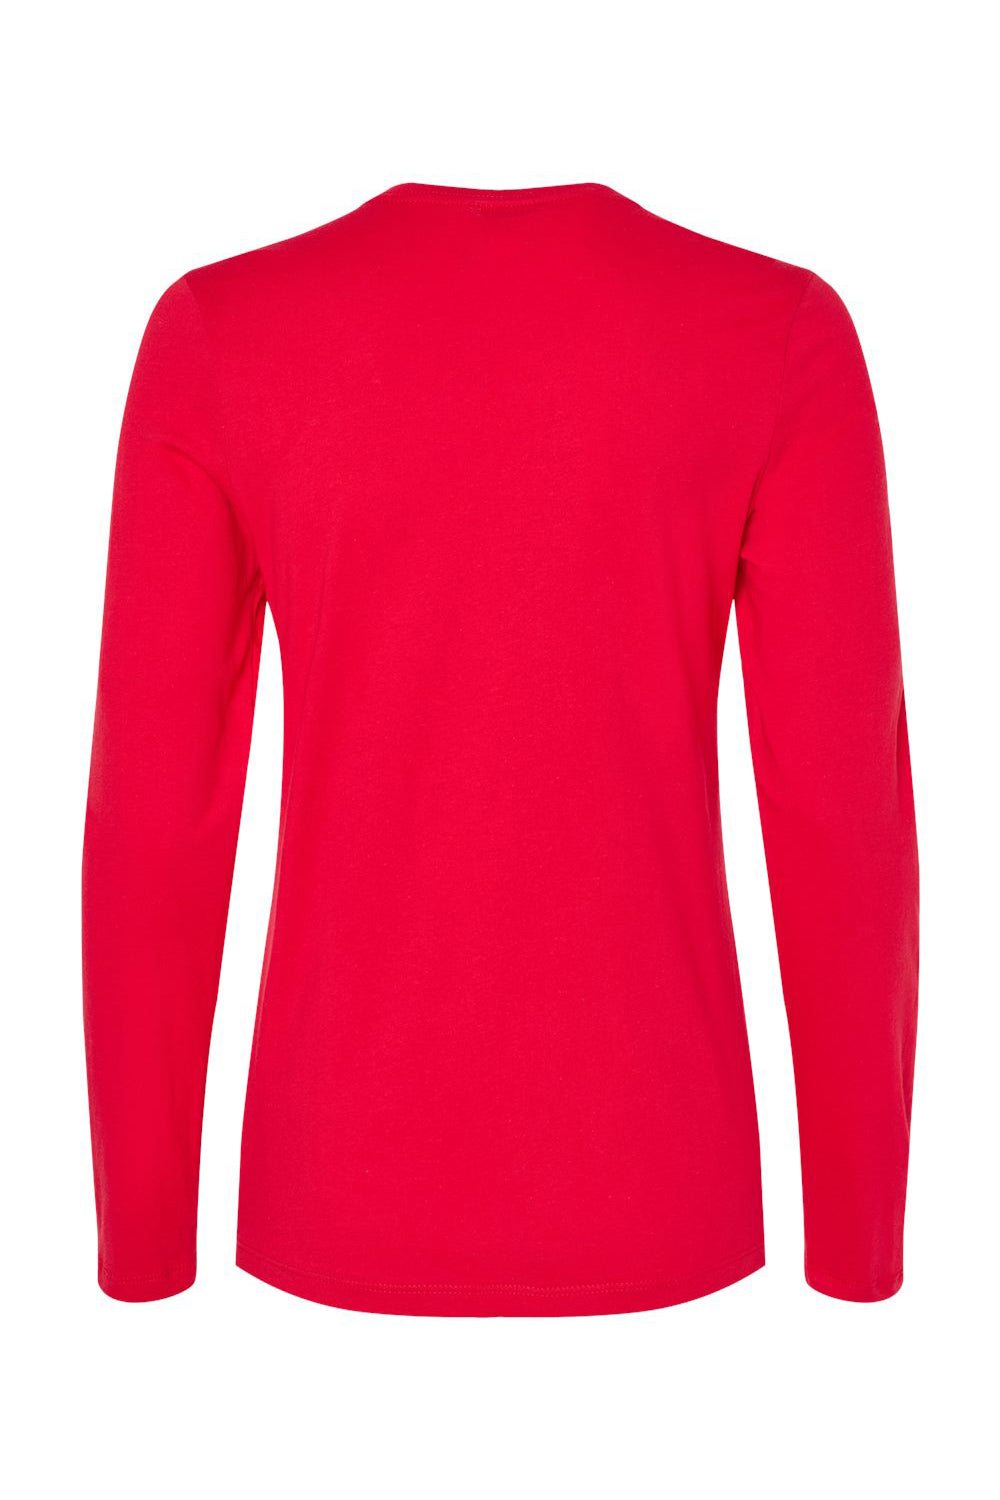 Bella + Canvas B6500/6500 Womens Jersey Long Sleeve Crewneck T-Shirt Red Flat Back